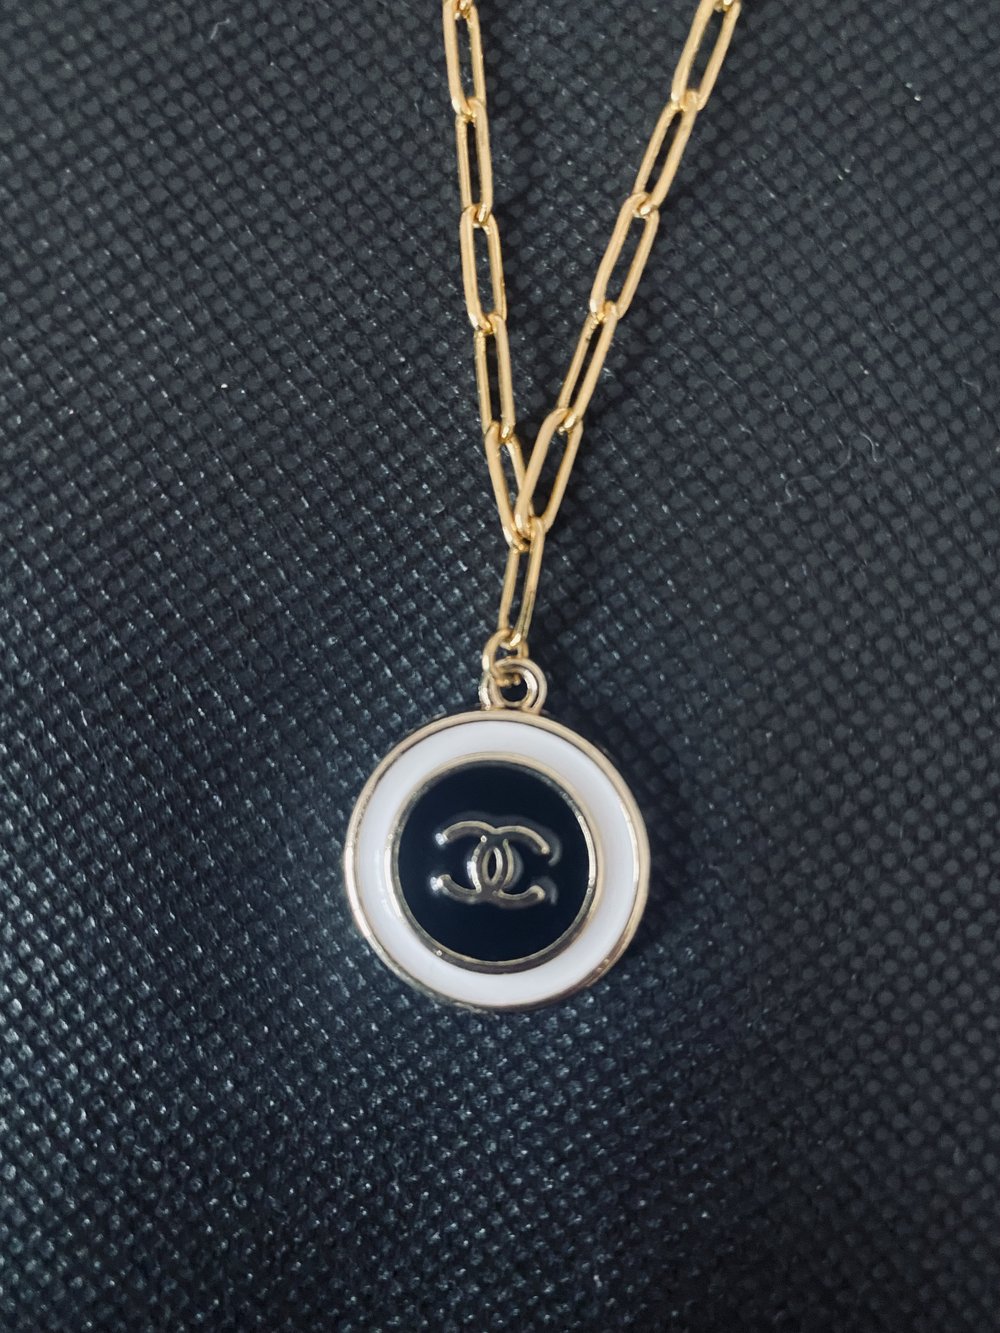 Shop - Designer Button Jewelry